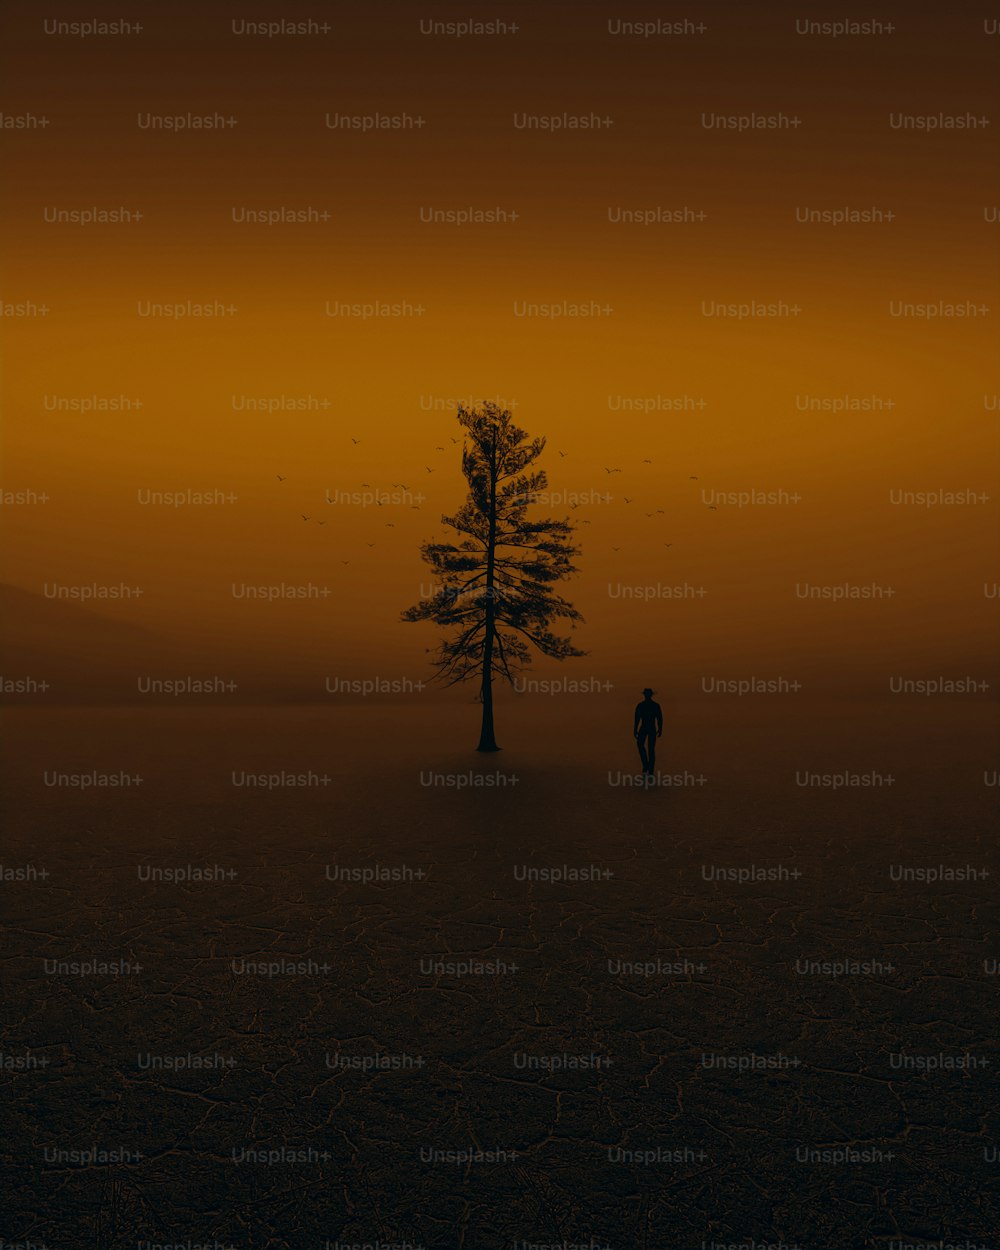 Un albero solitario in mezzo a un campo